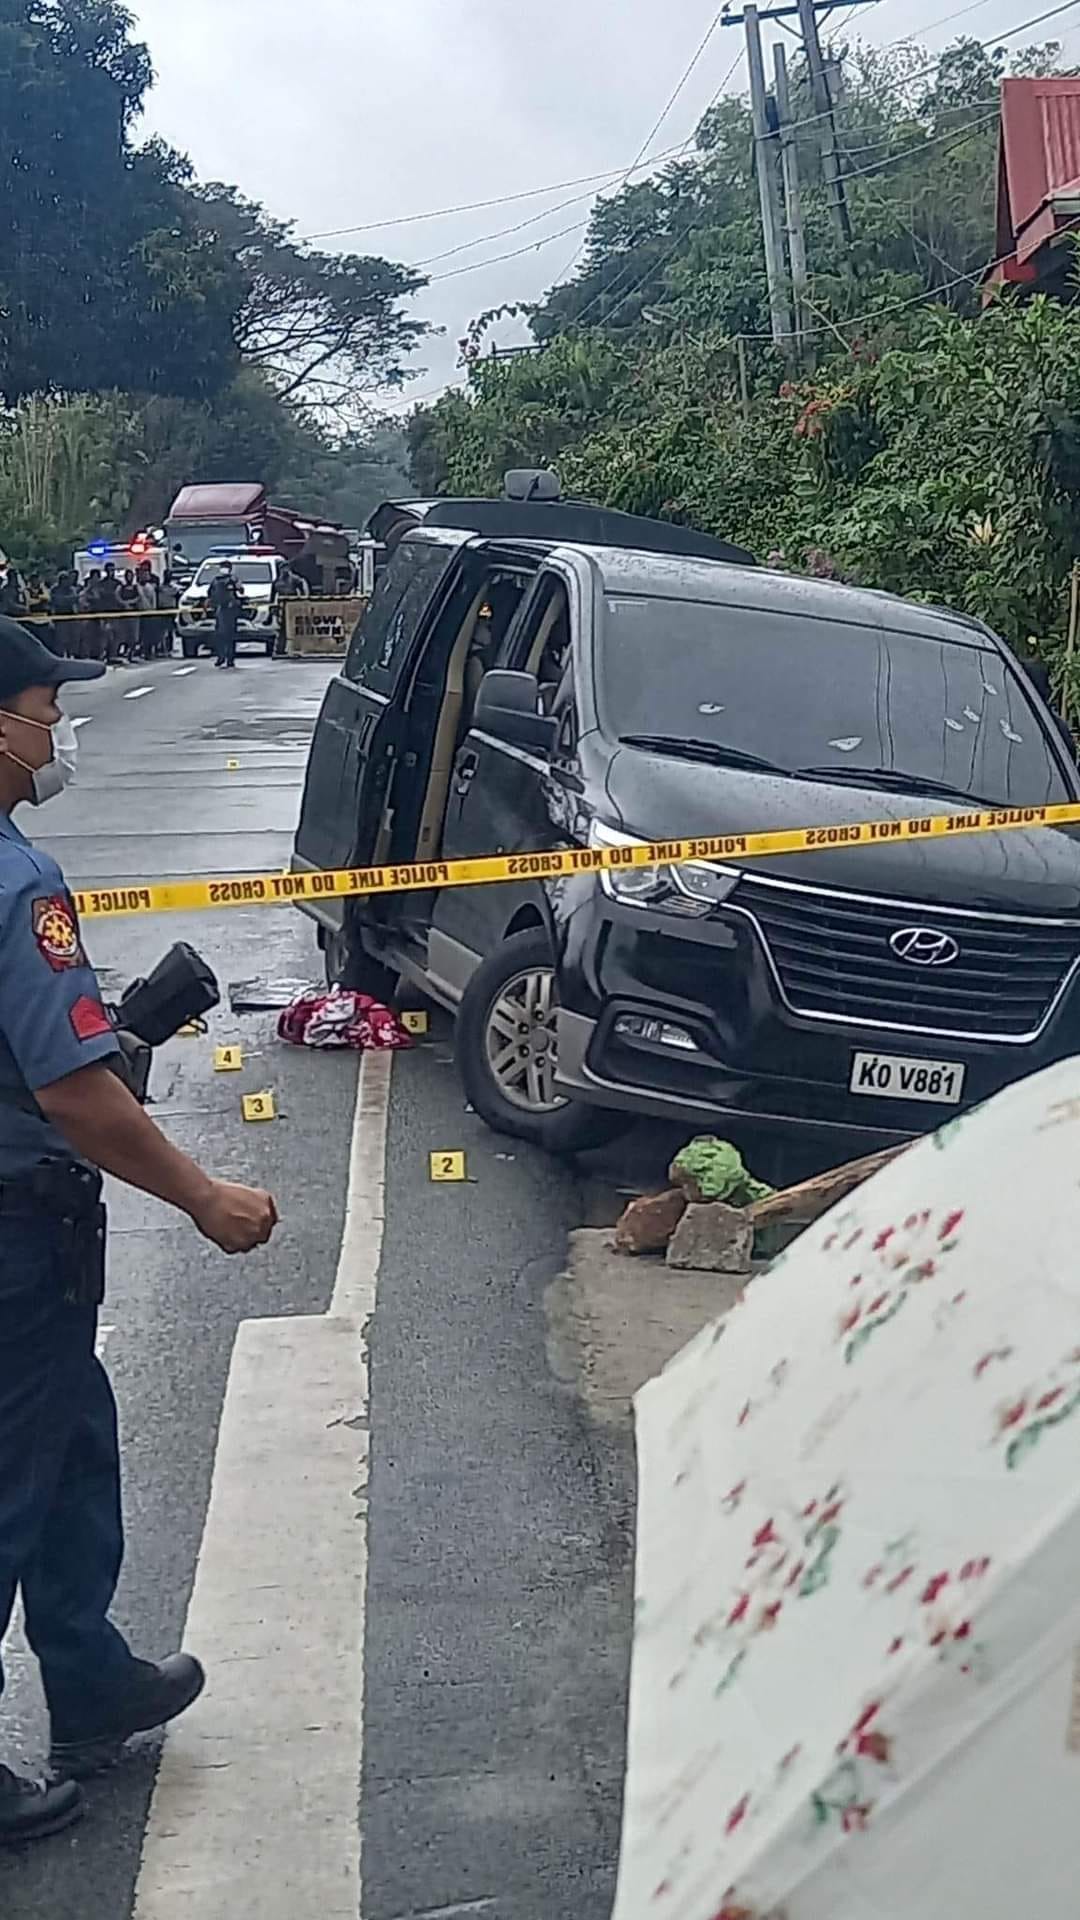 Aparri vice mayor, 5 others killed in Nueva Vizcaya ambush